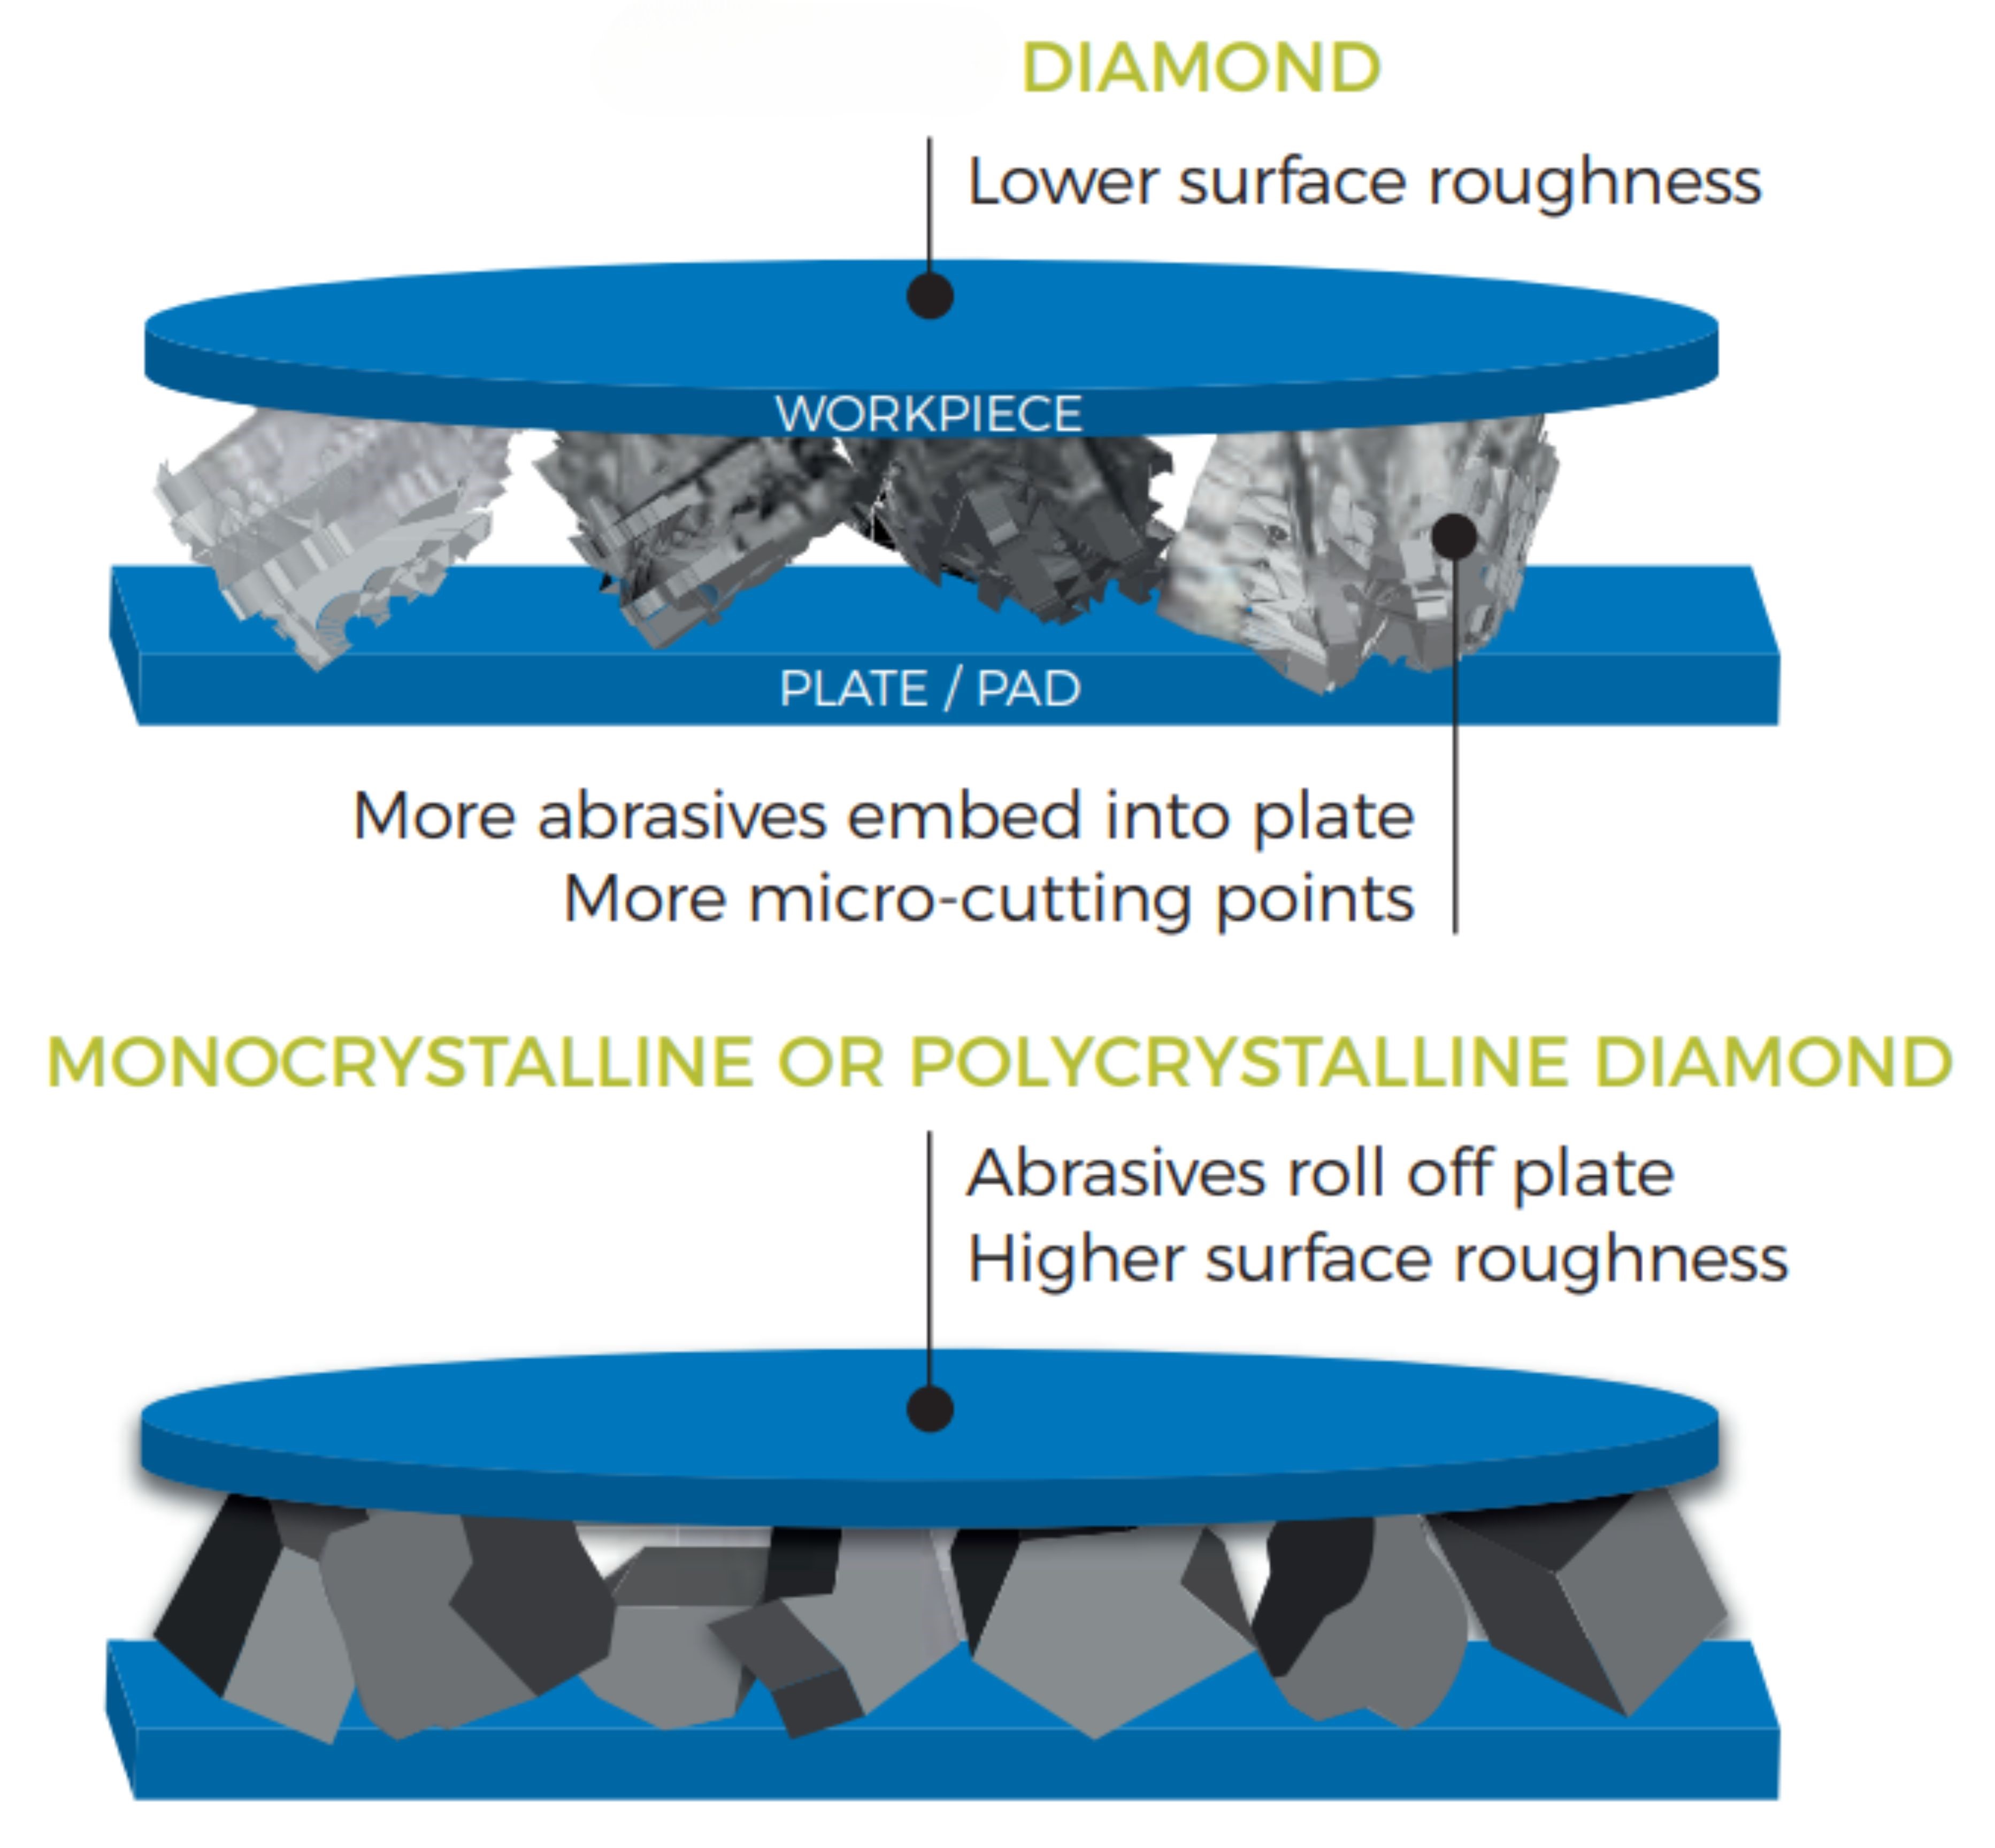 Diamond slurries cutting properties